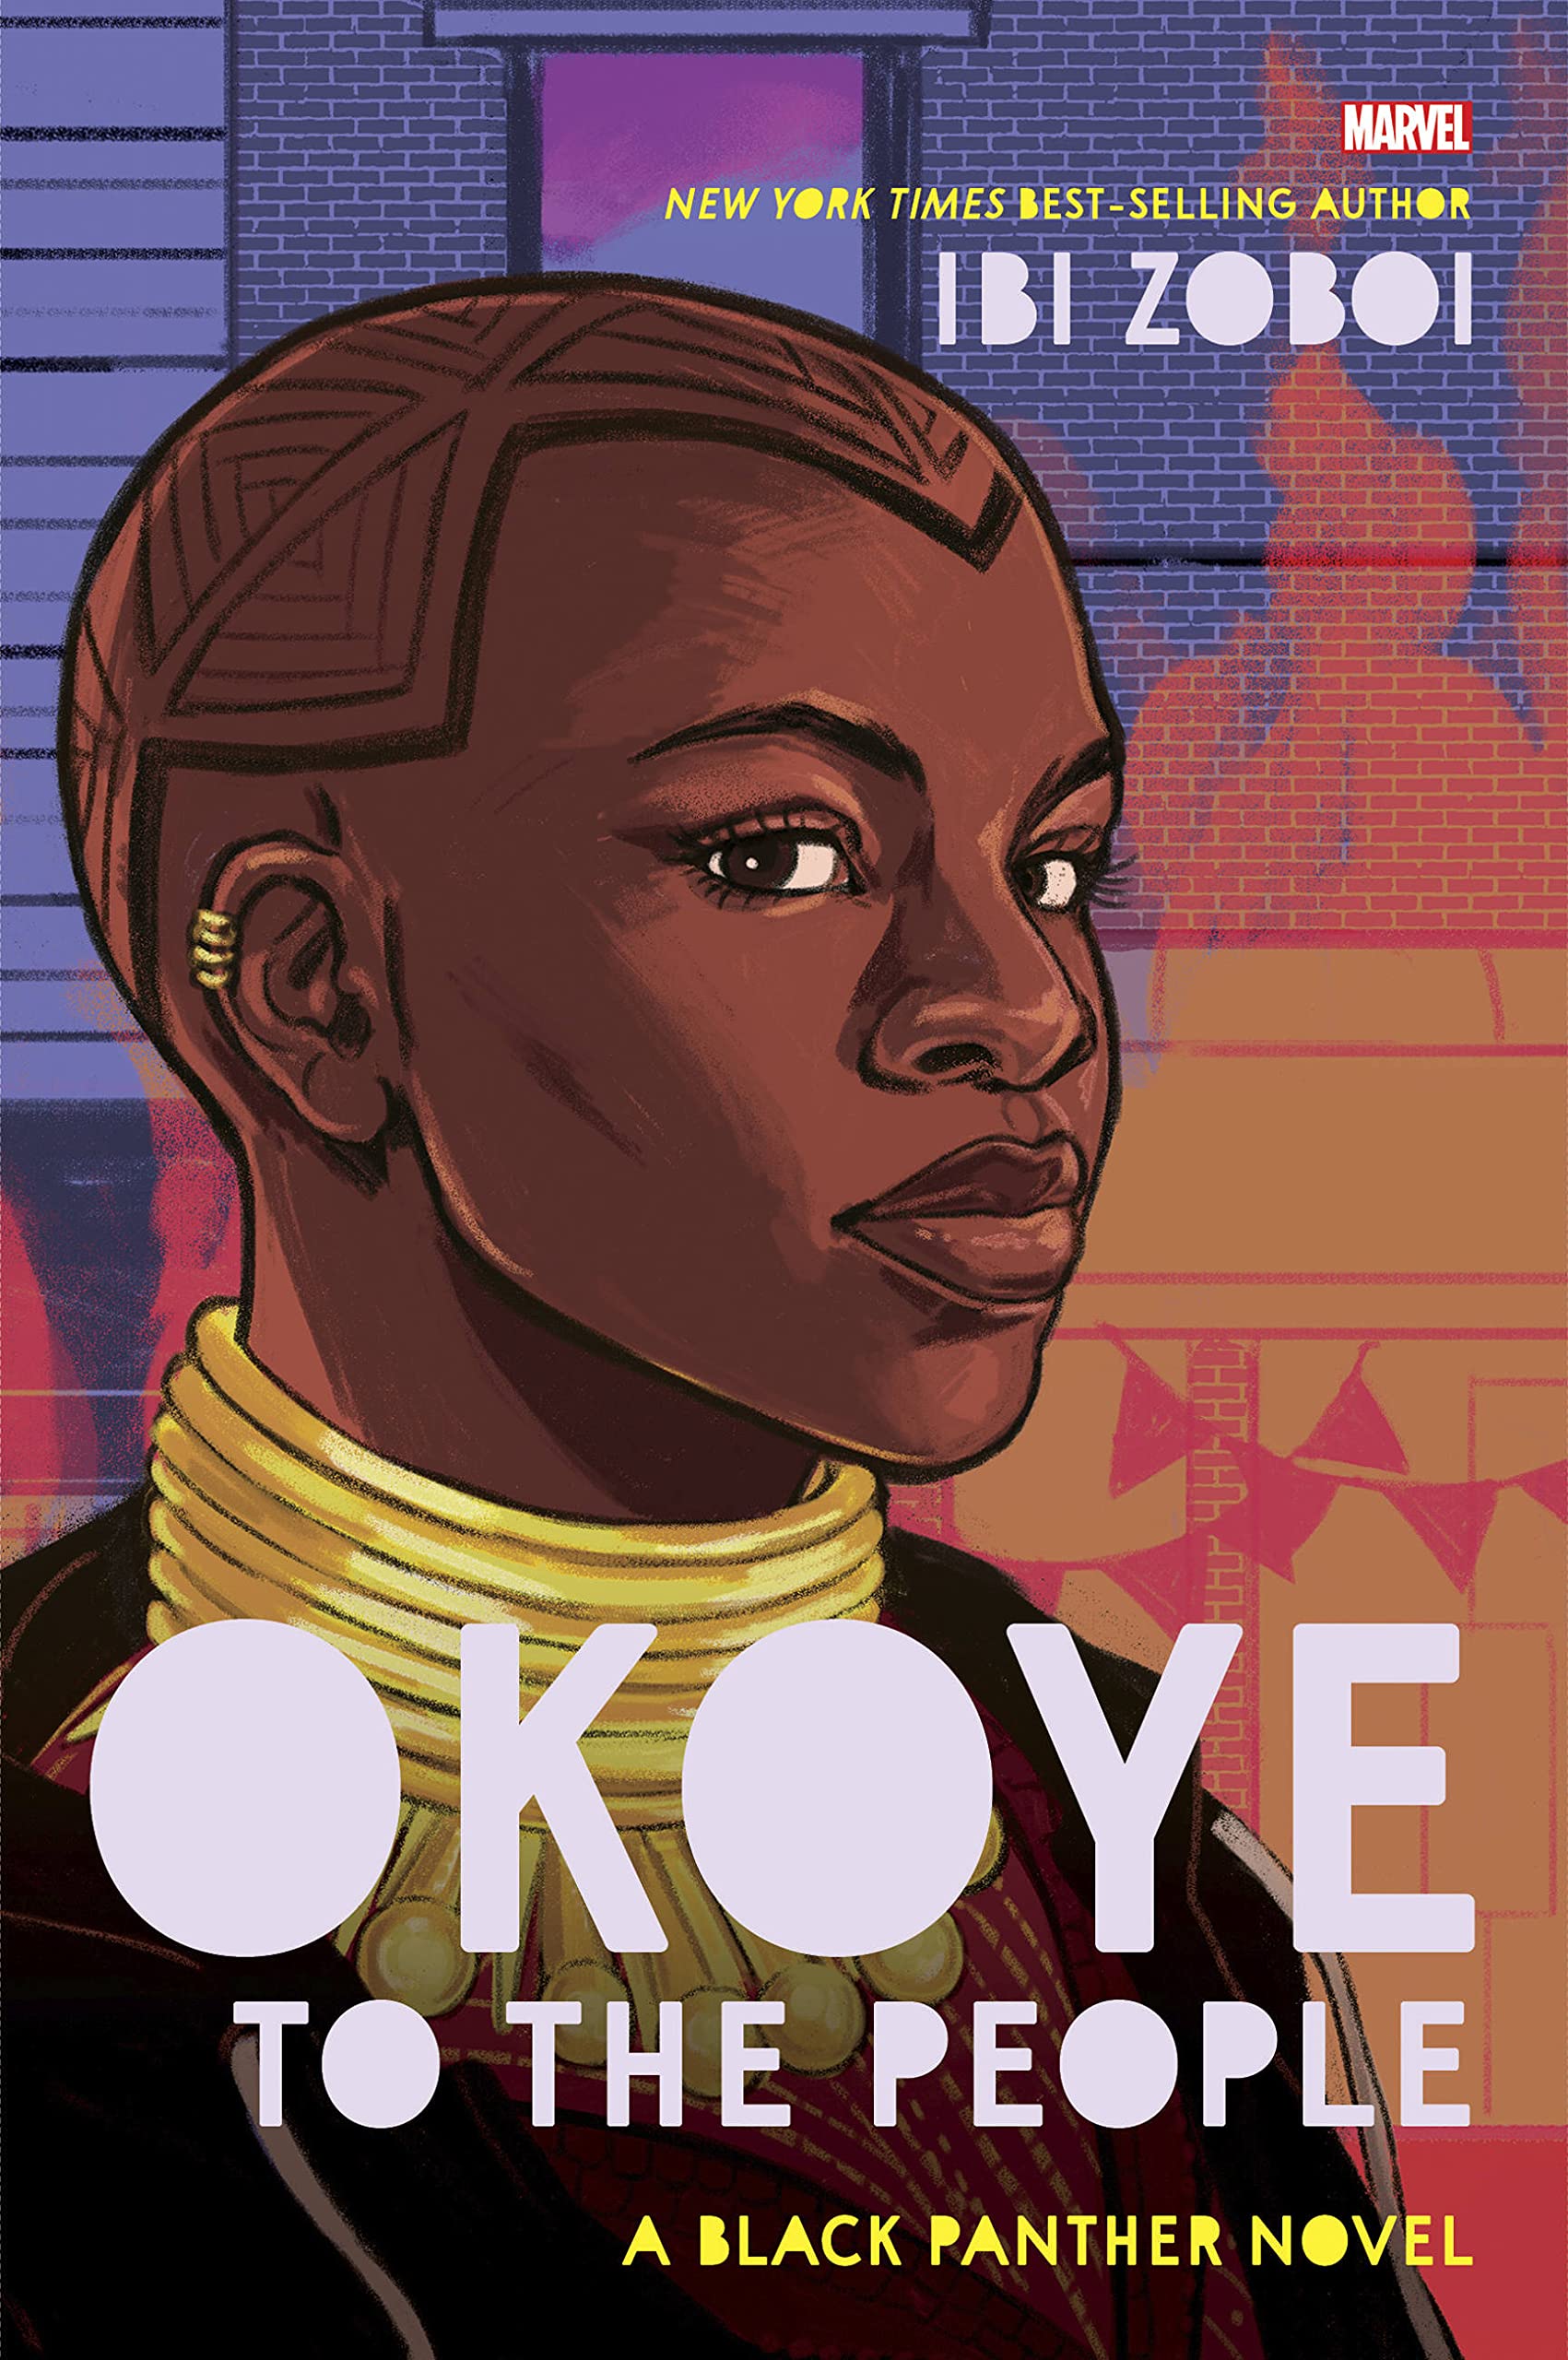 Image for "Okoye to the People"